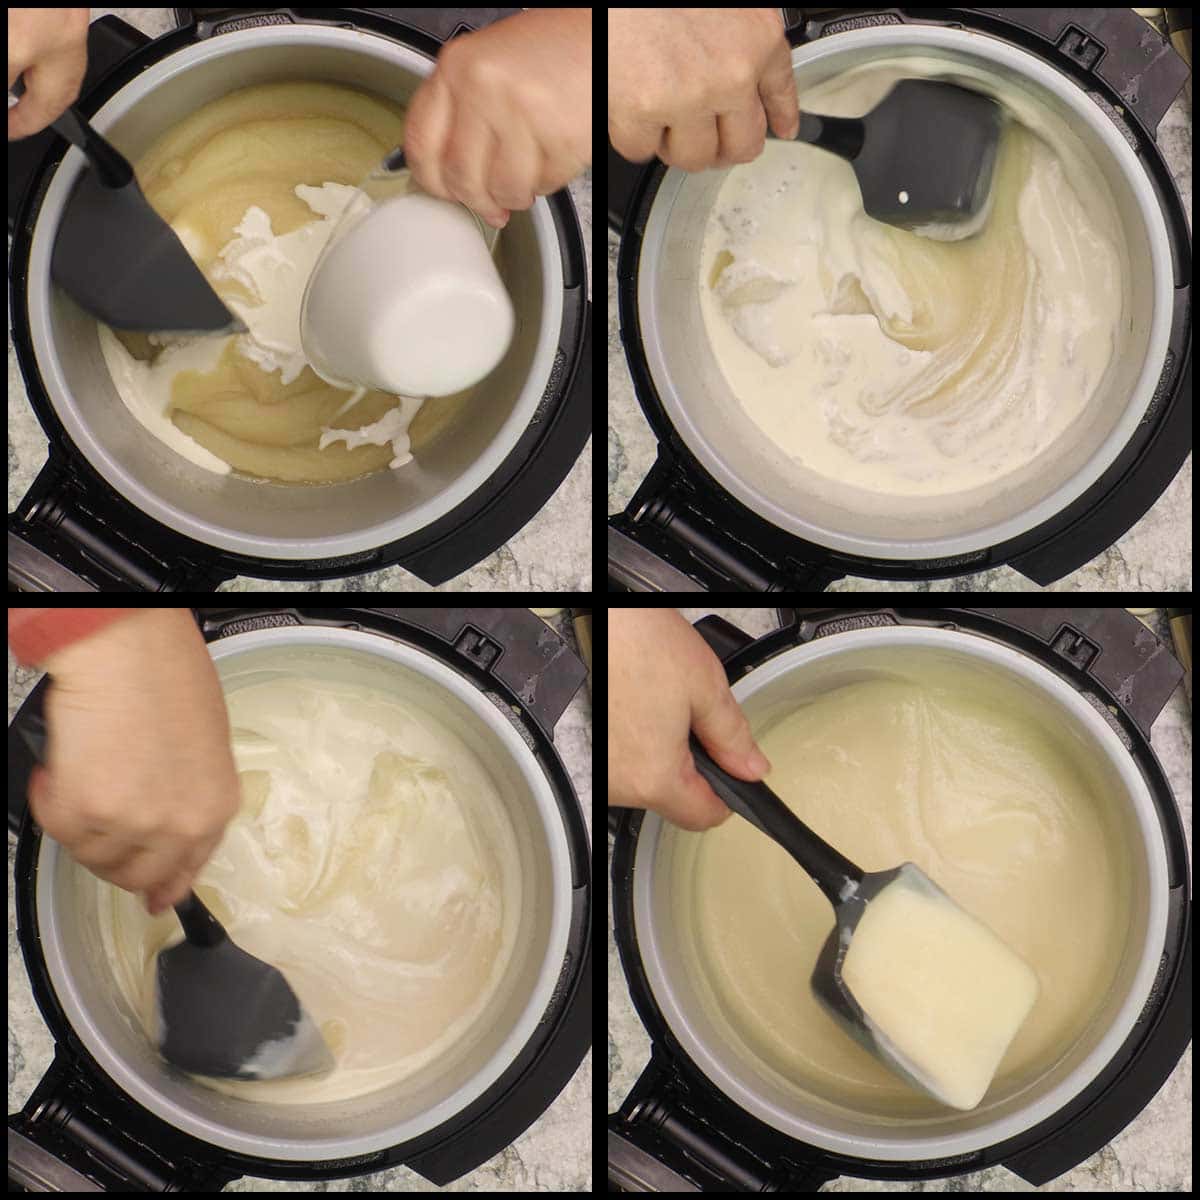 stirring in cream to the potato puree in the inner pot of the Ninja Foodi.